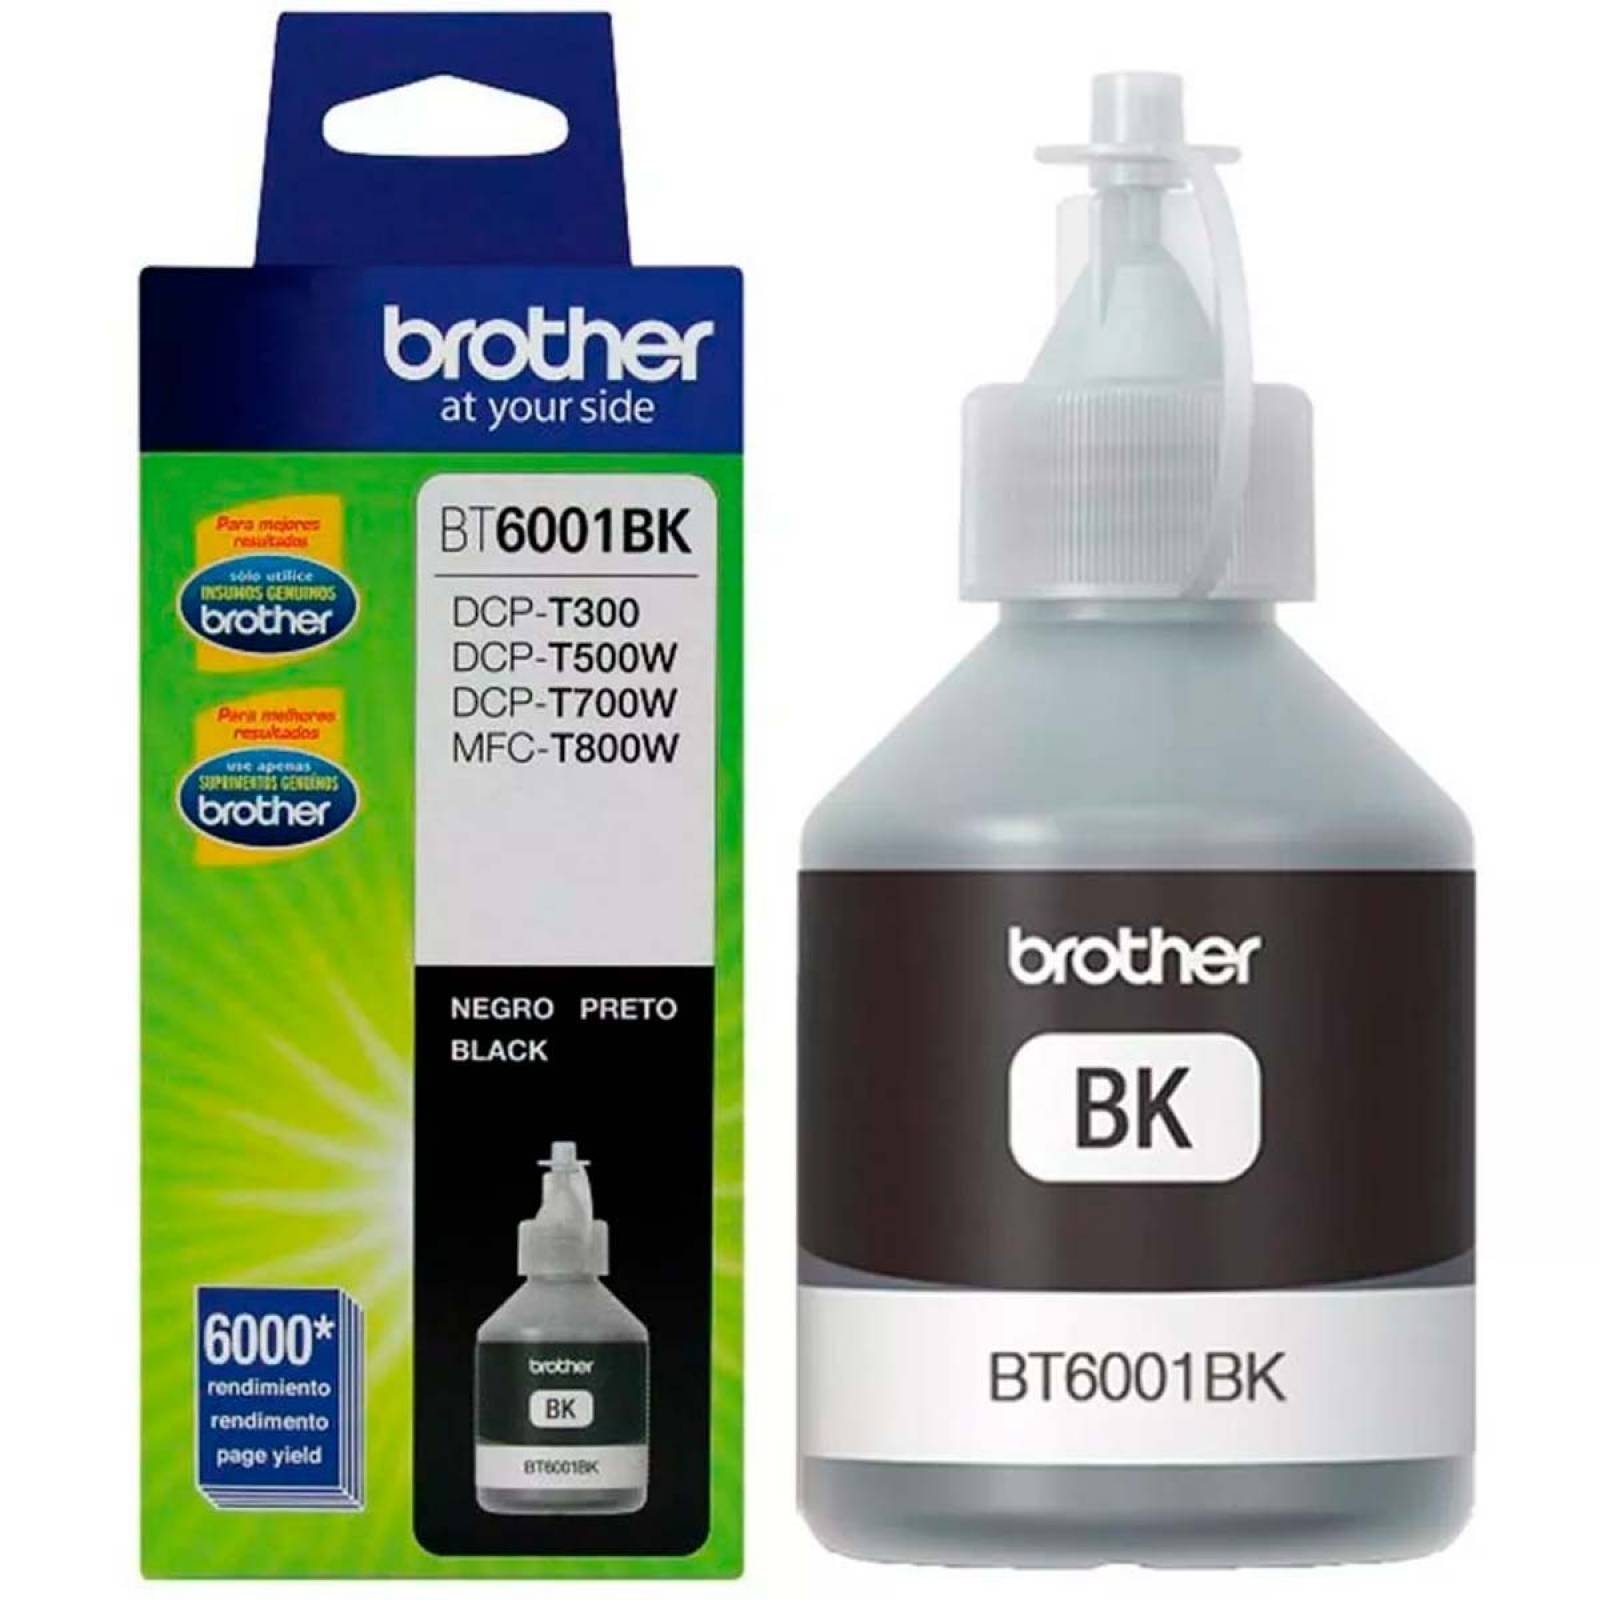 Botella de tinta BROTHER BT6001BK negra